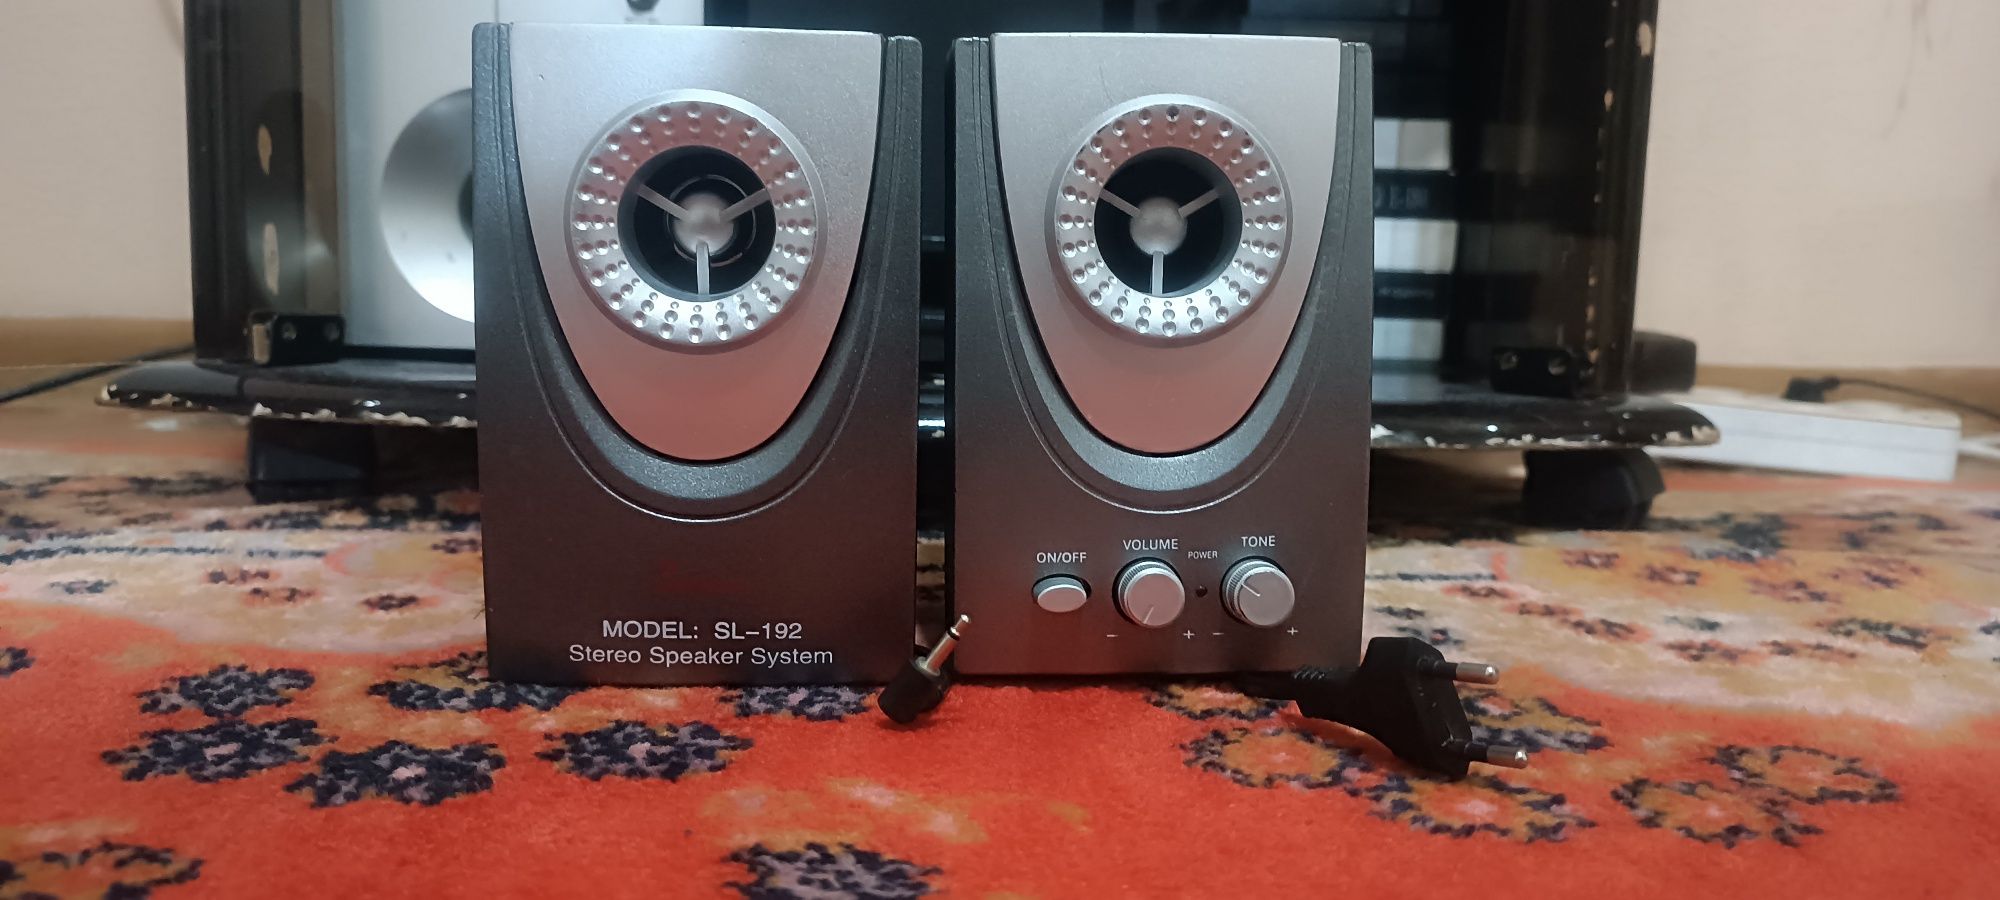 Microlab modeli:FC370 M:900